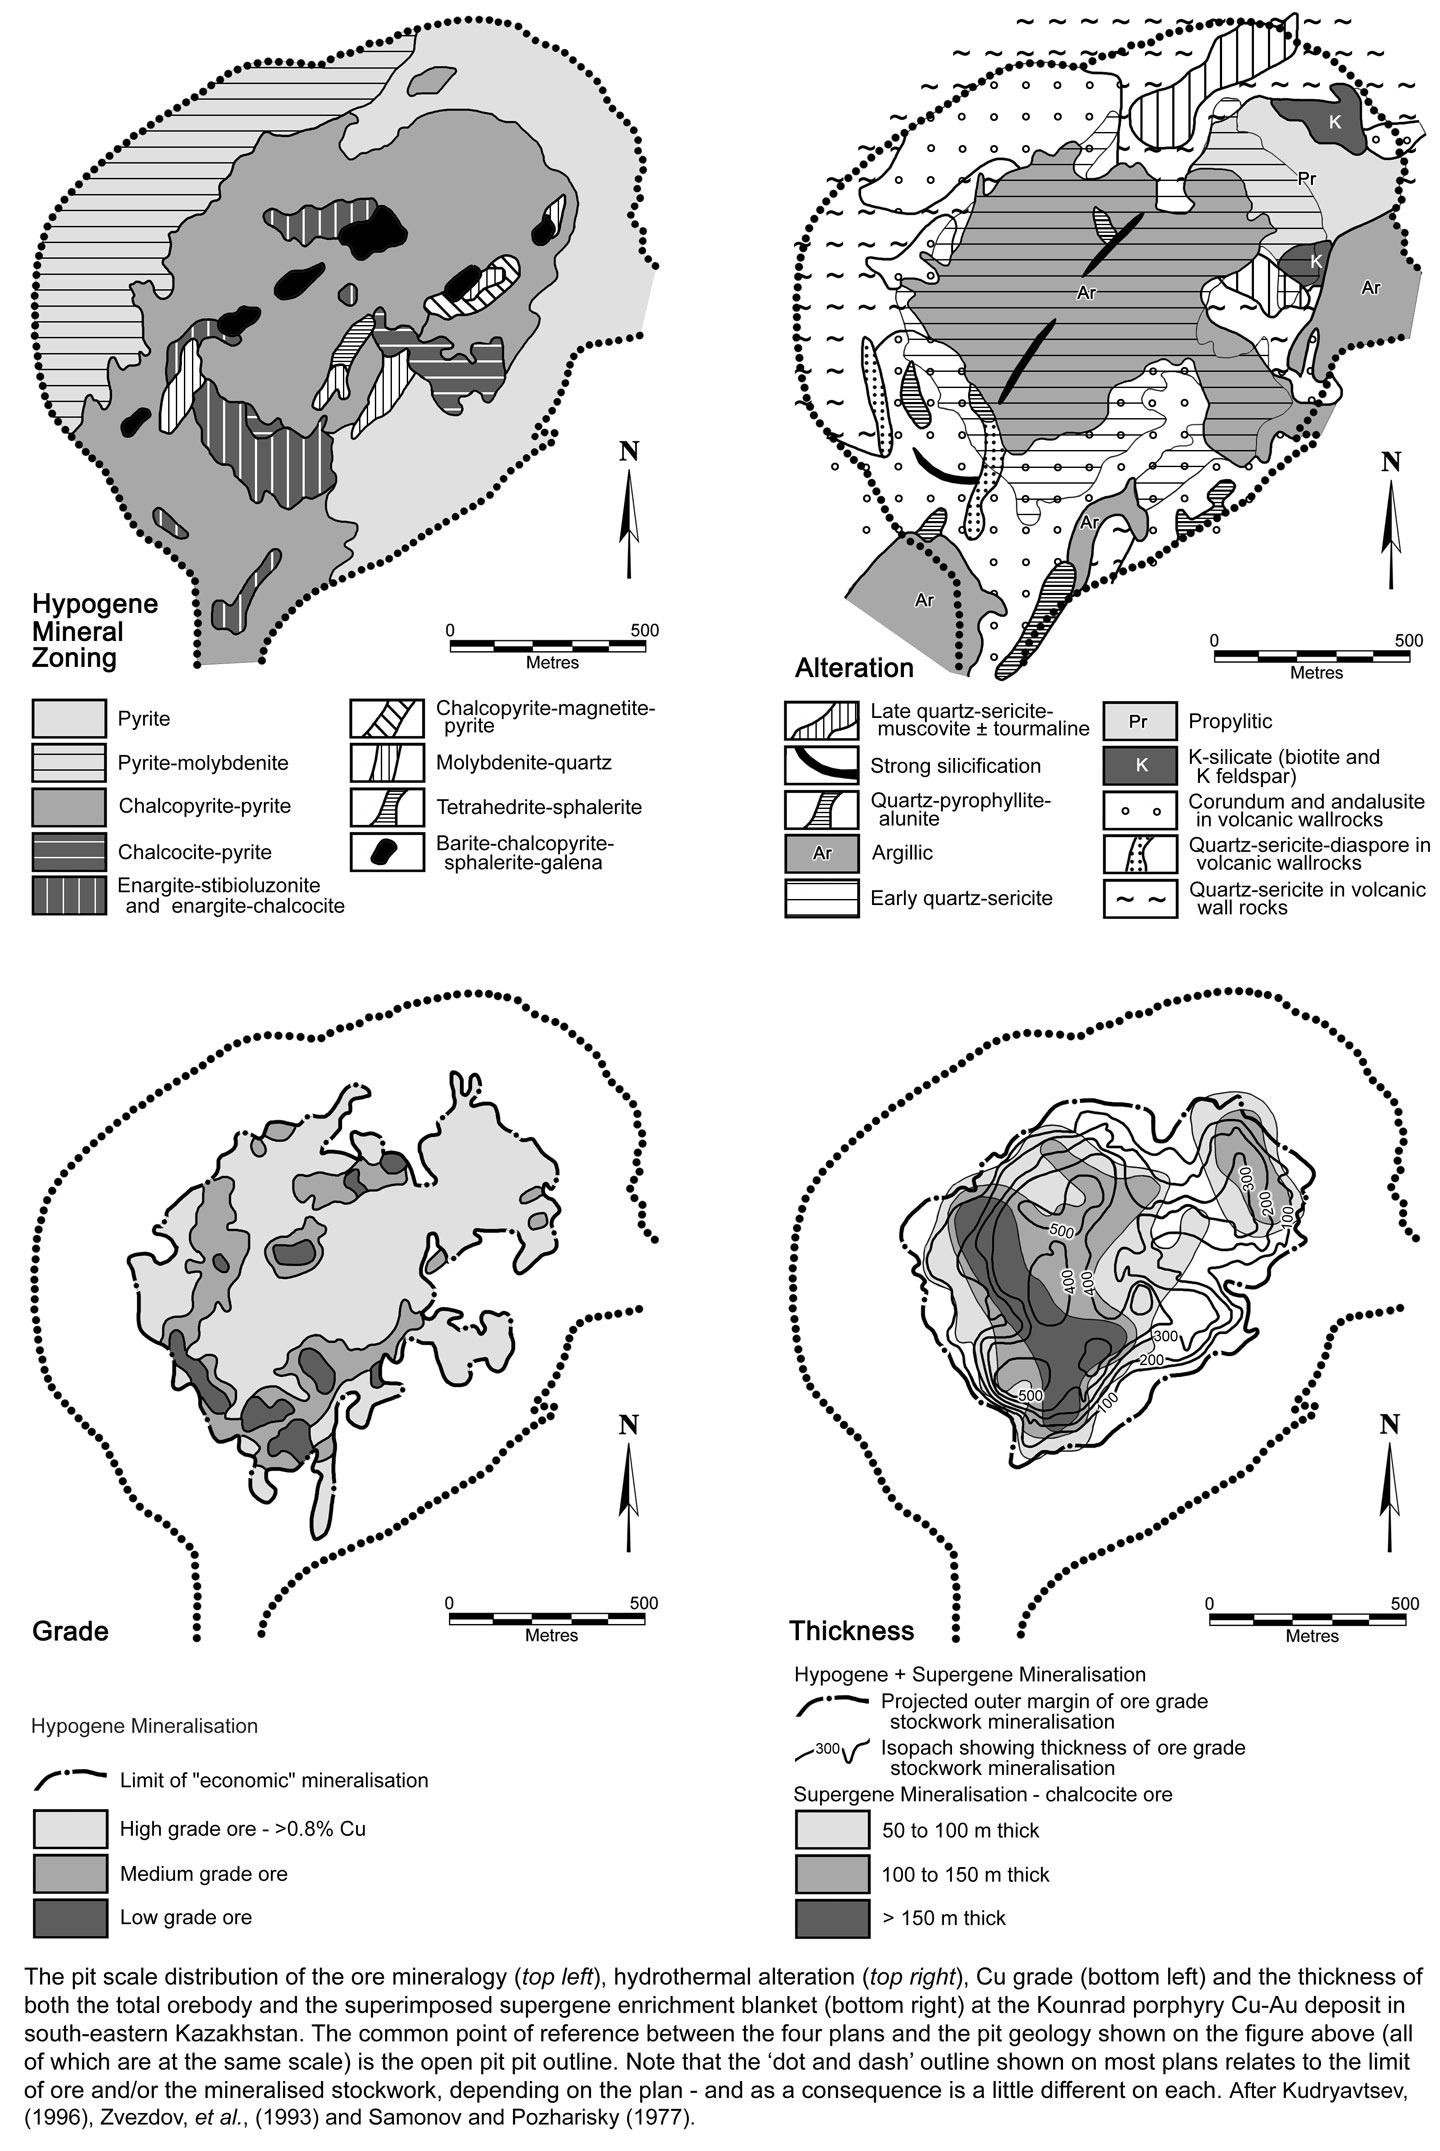 Kounrad Mineralisation and Alteration